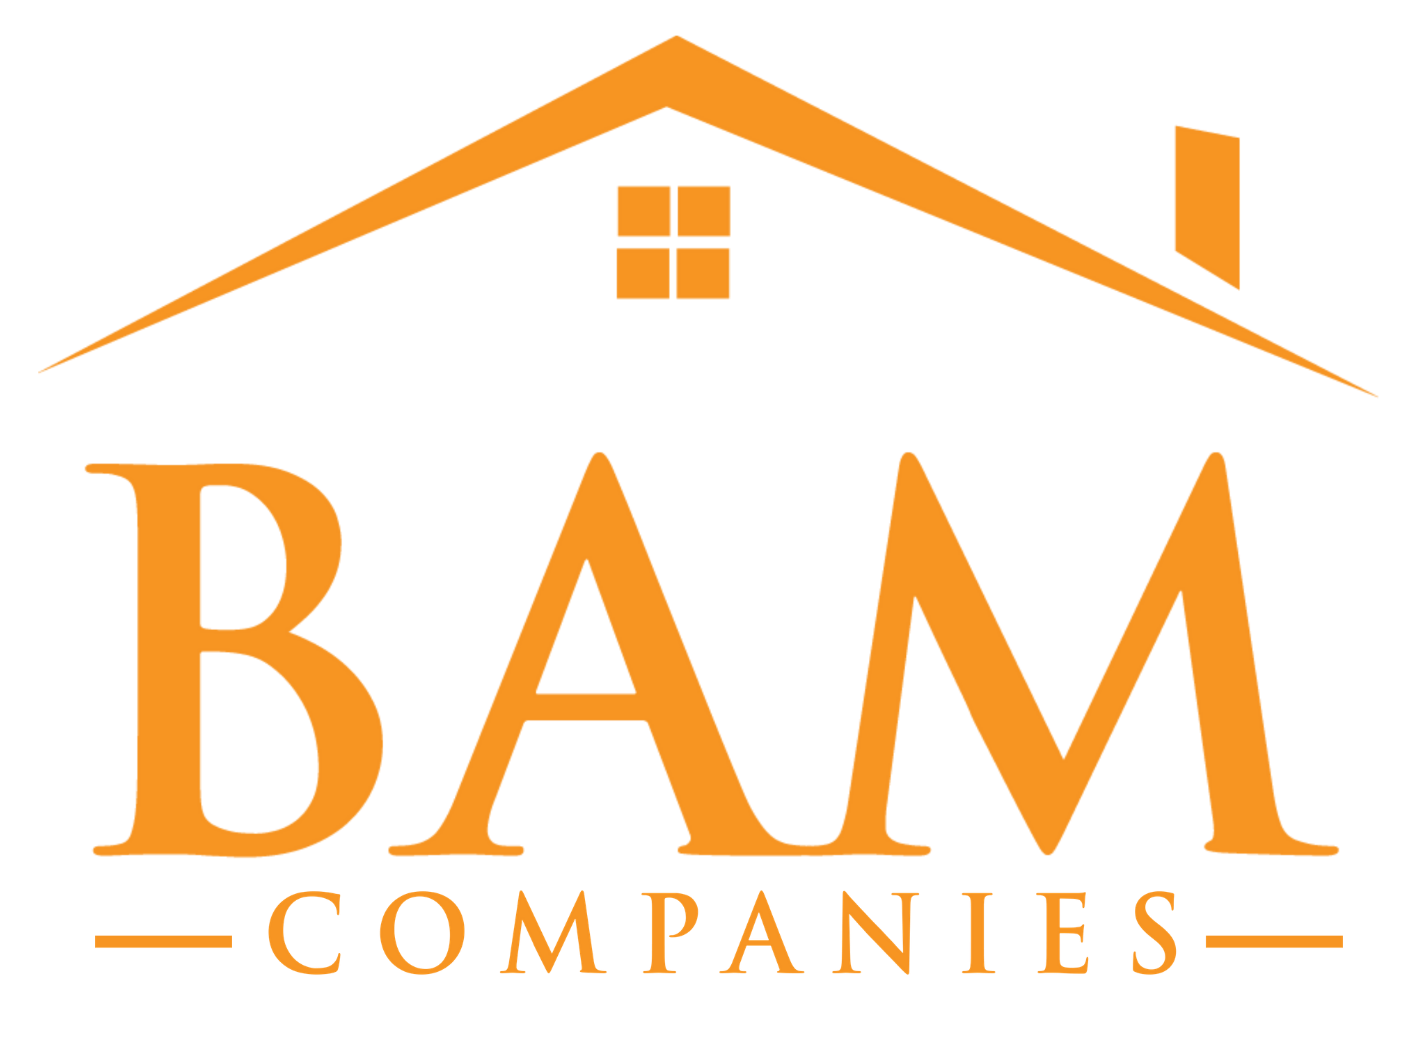 The BAM Companies Company Logo